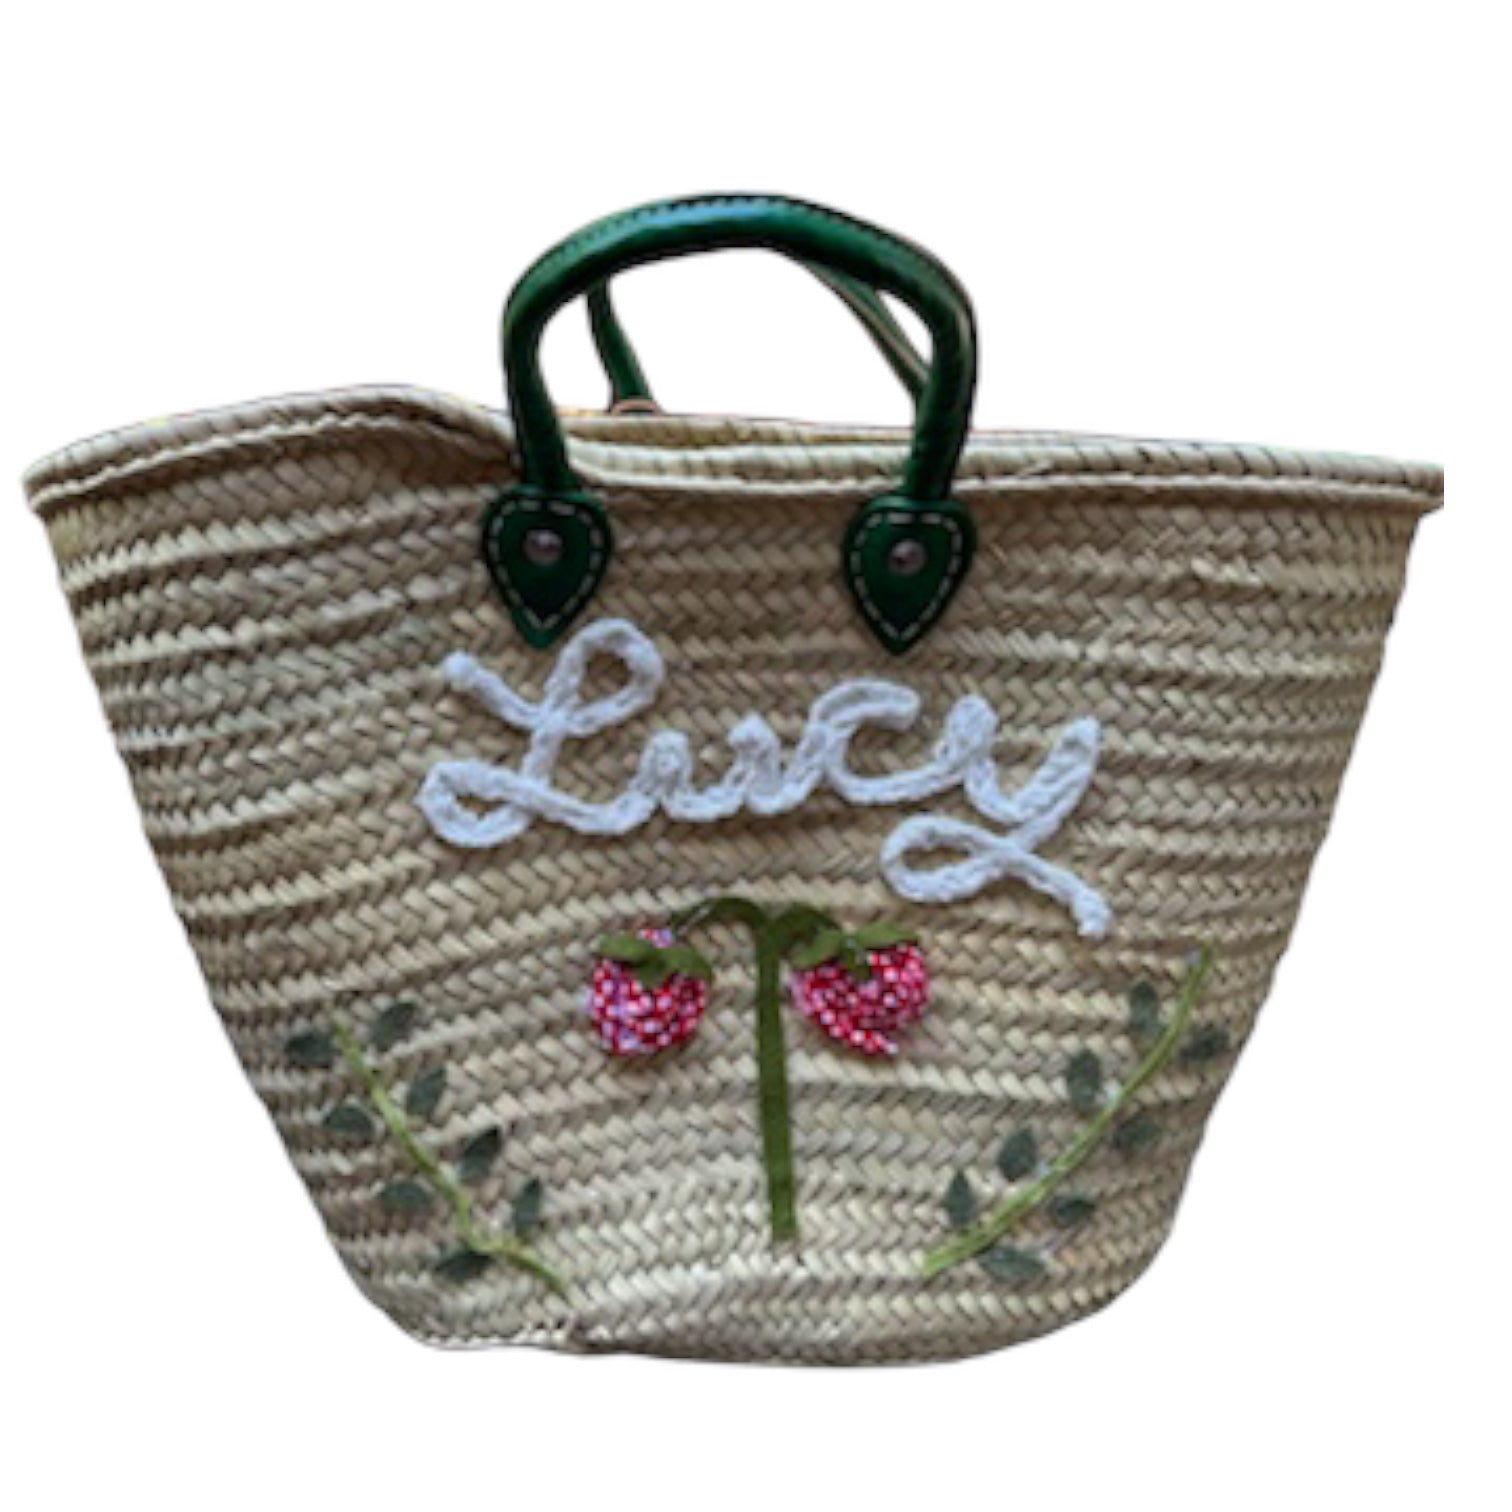 Big Embroidered Bag / Basket / French Market Basket / Straw Basket - green - Premium  from Tricia Lowenfield Design 